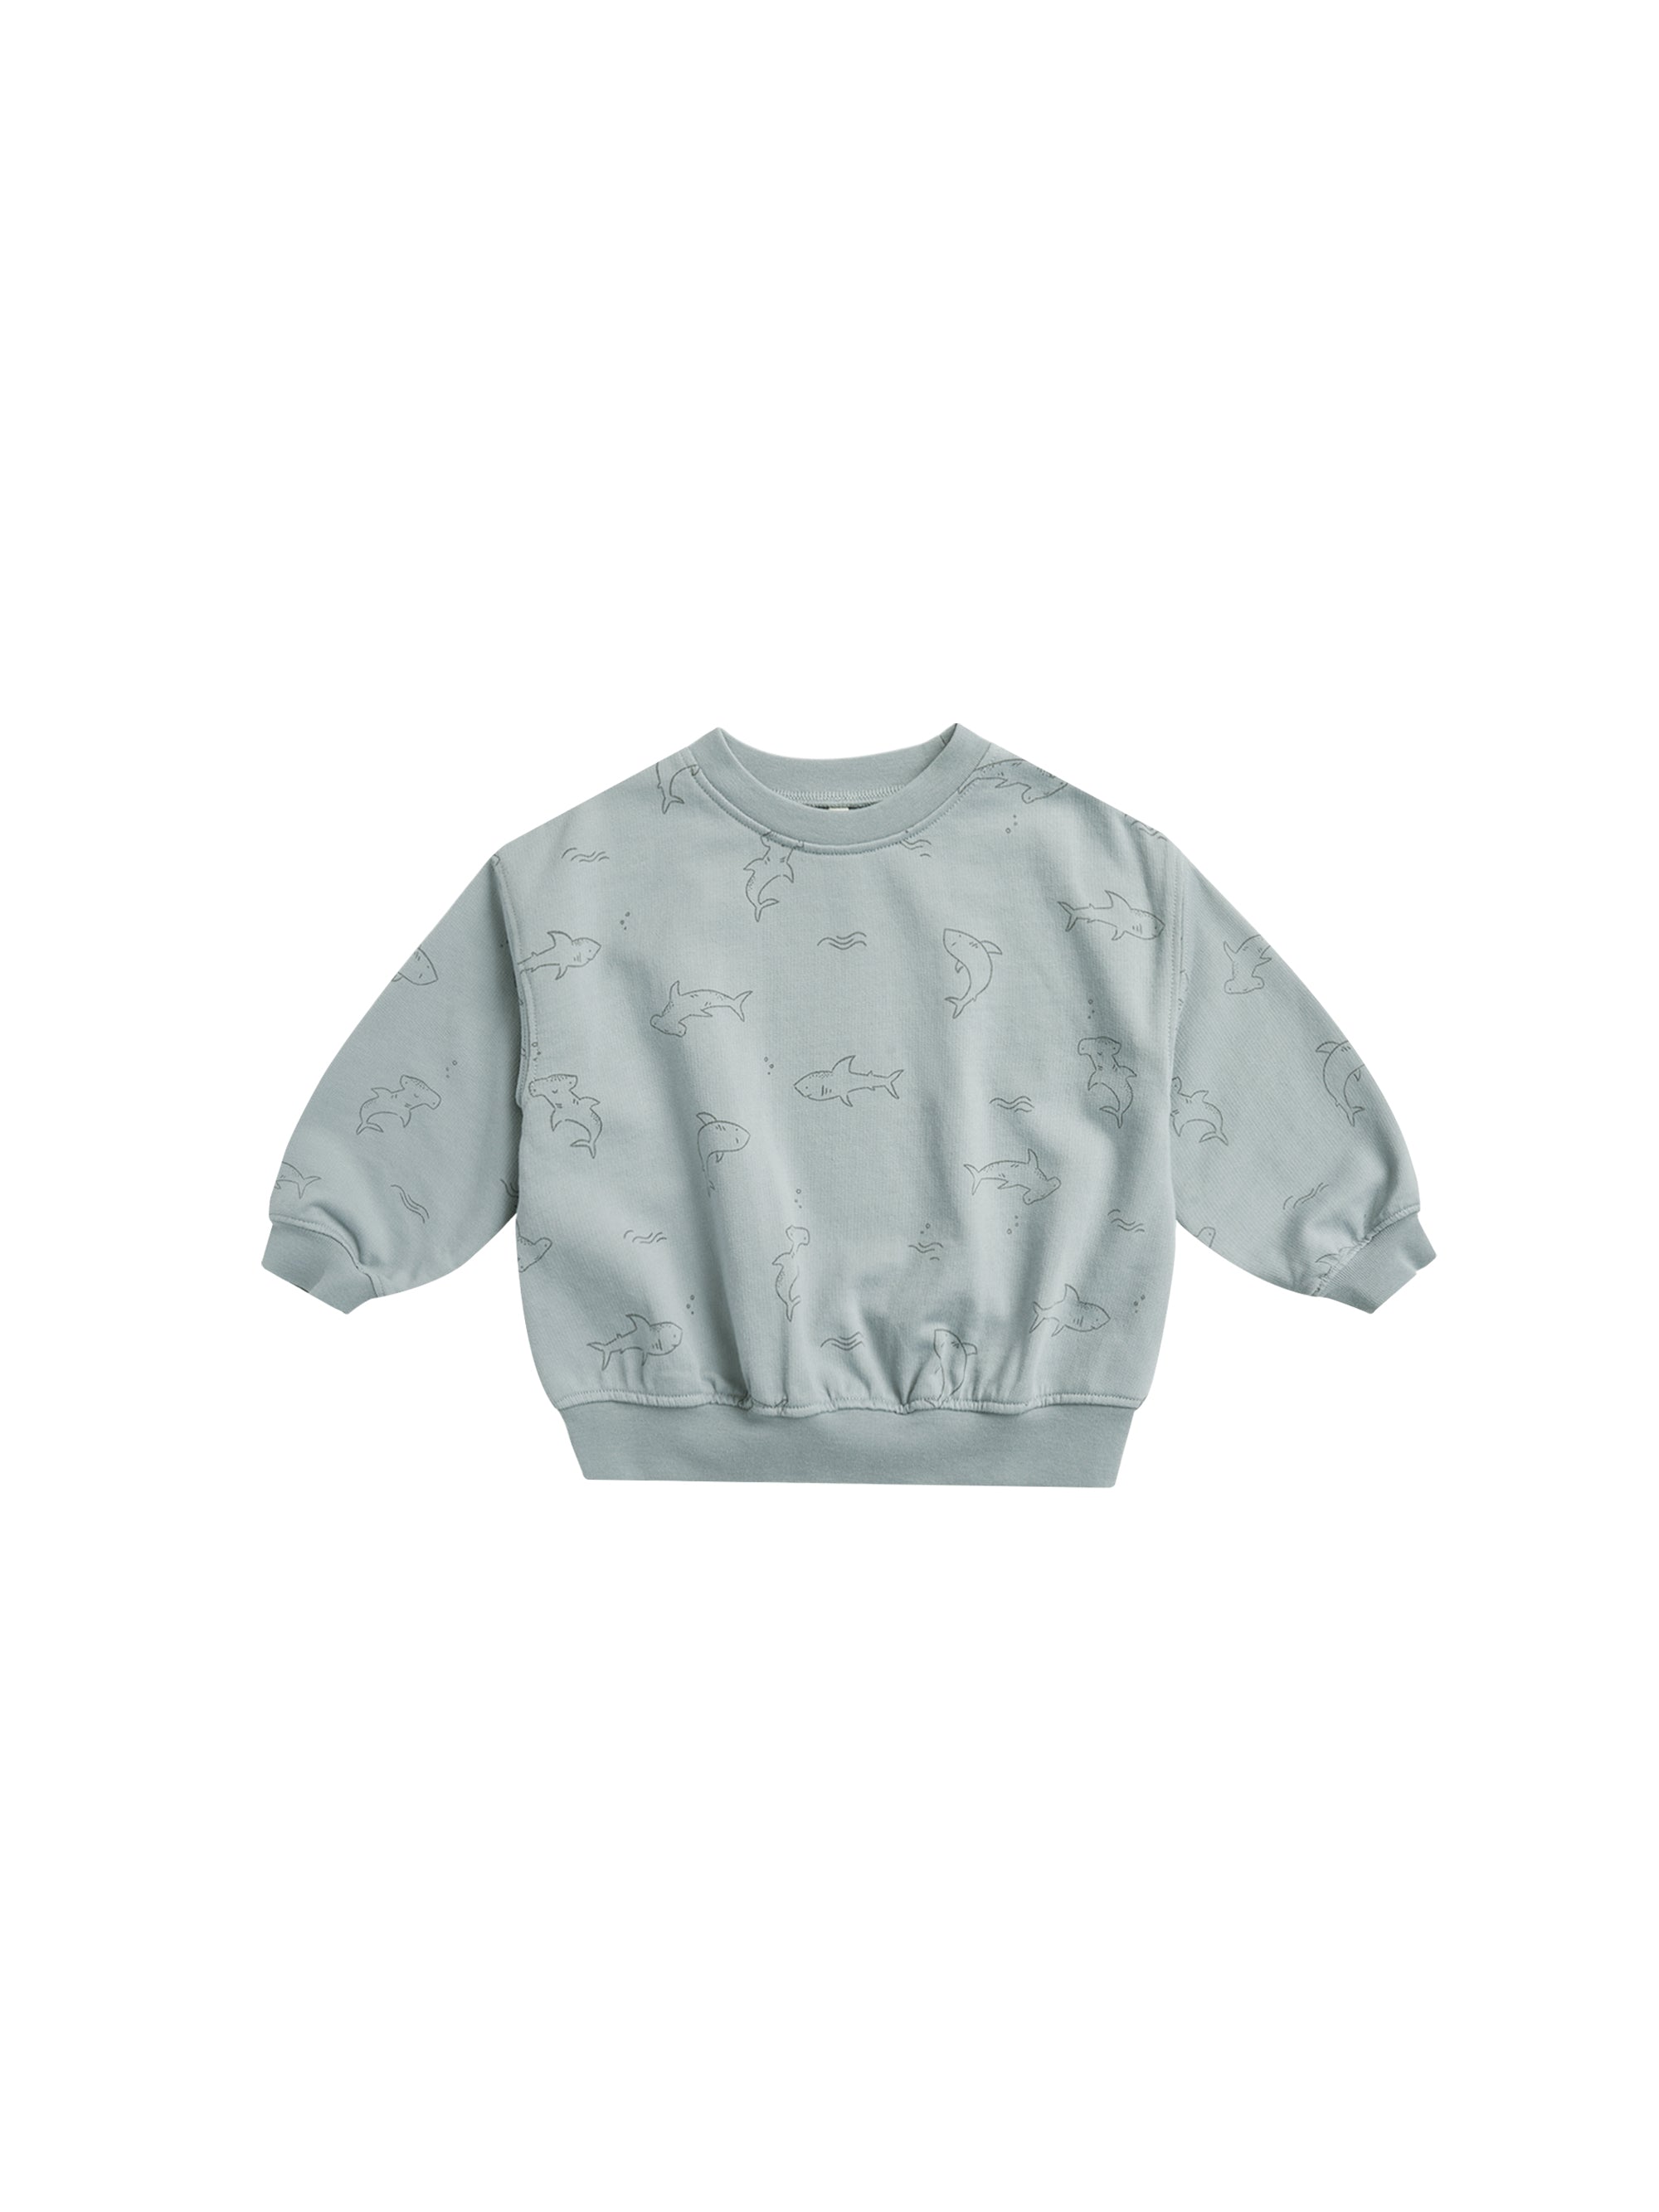 Rylee + Cru Shark Sweatshirt